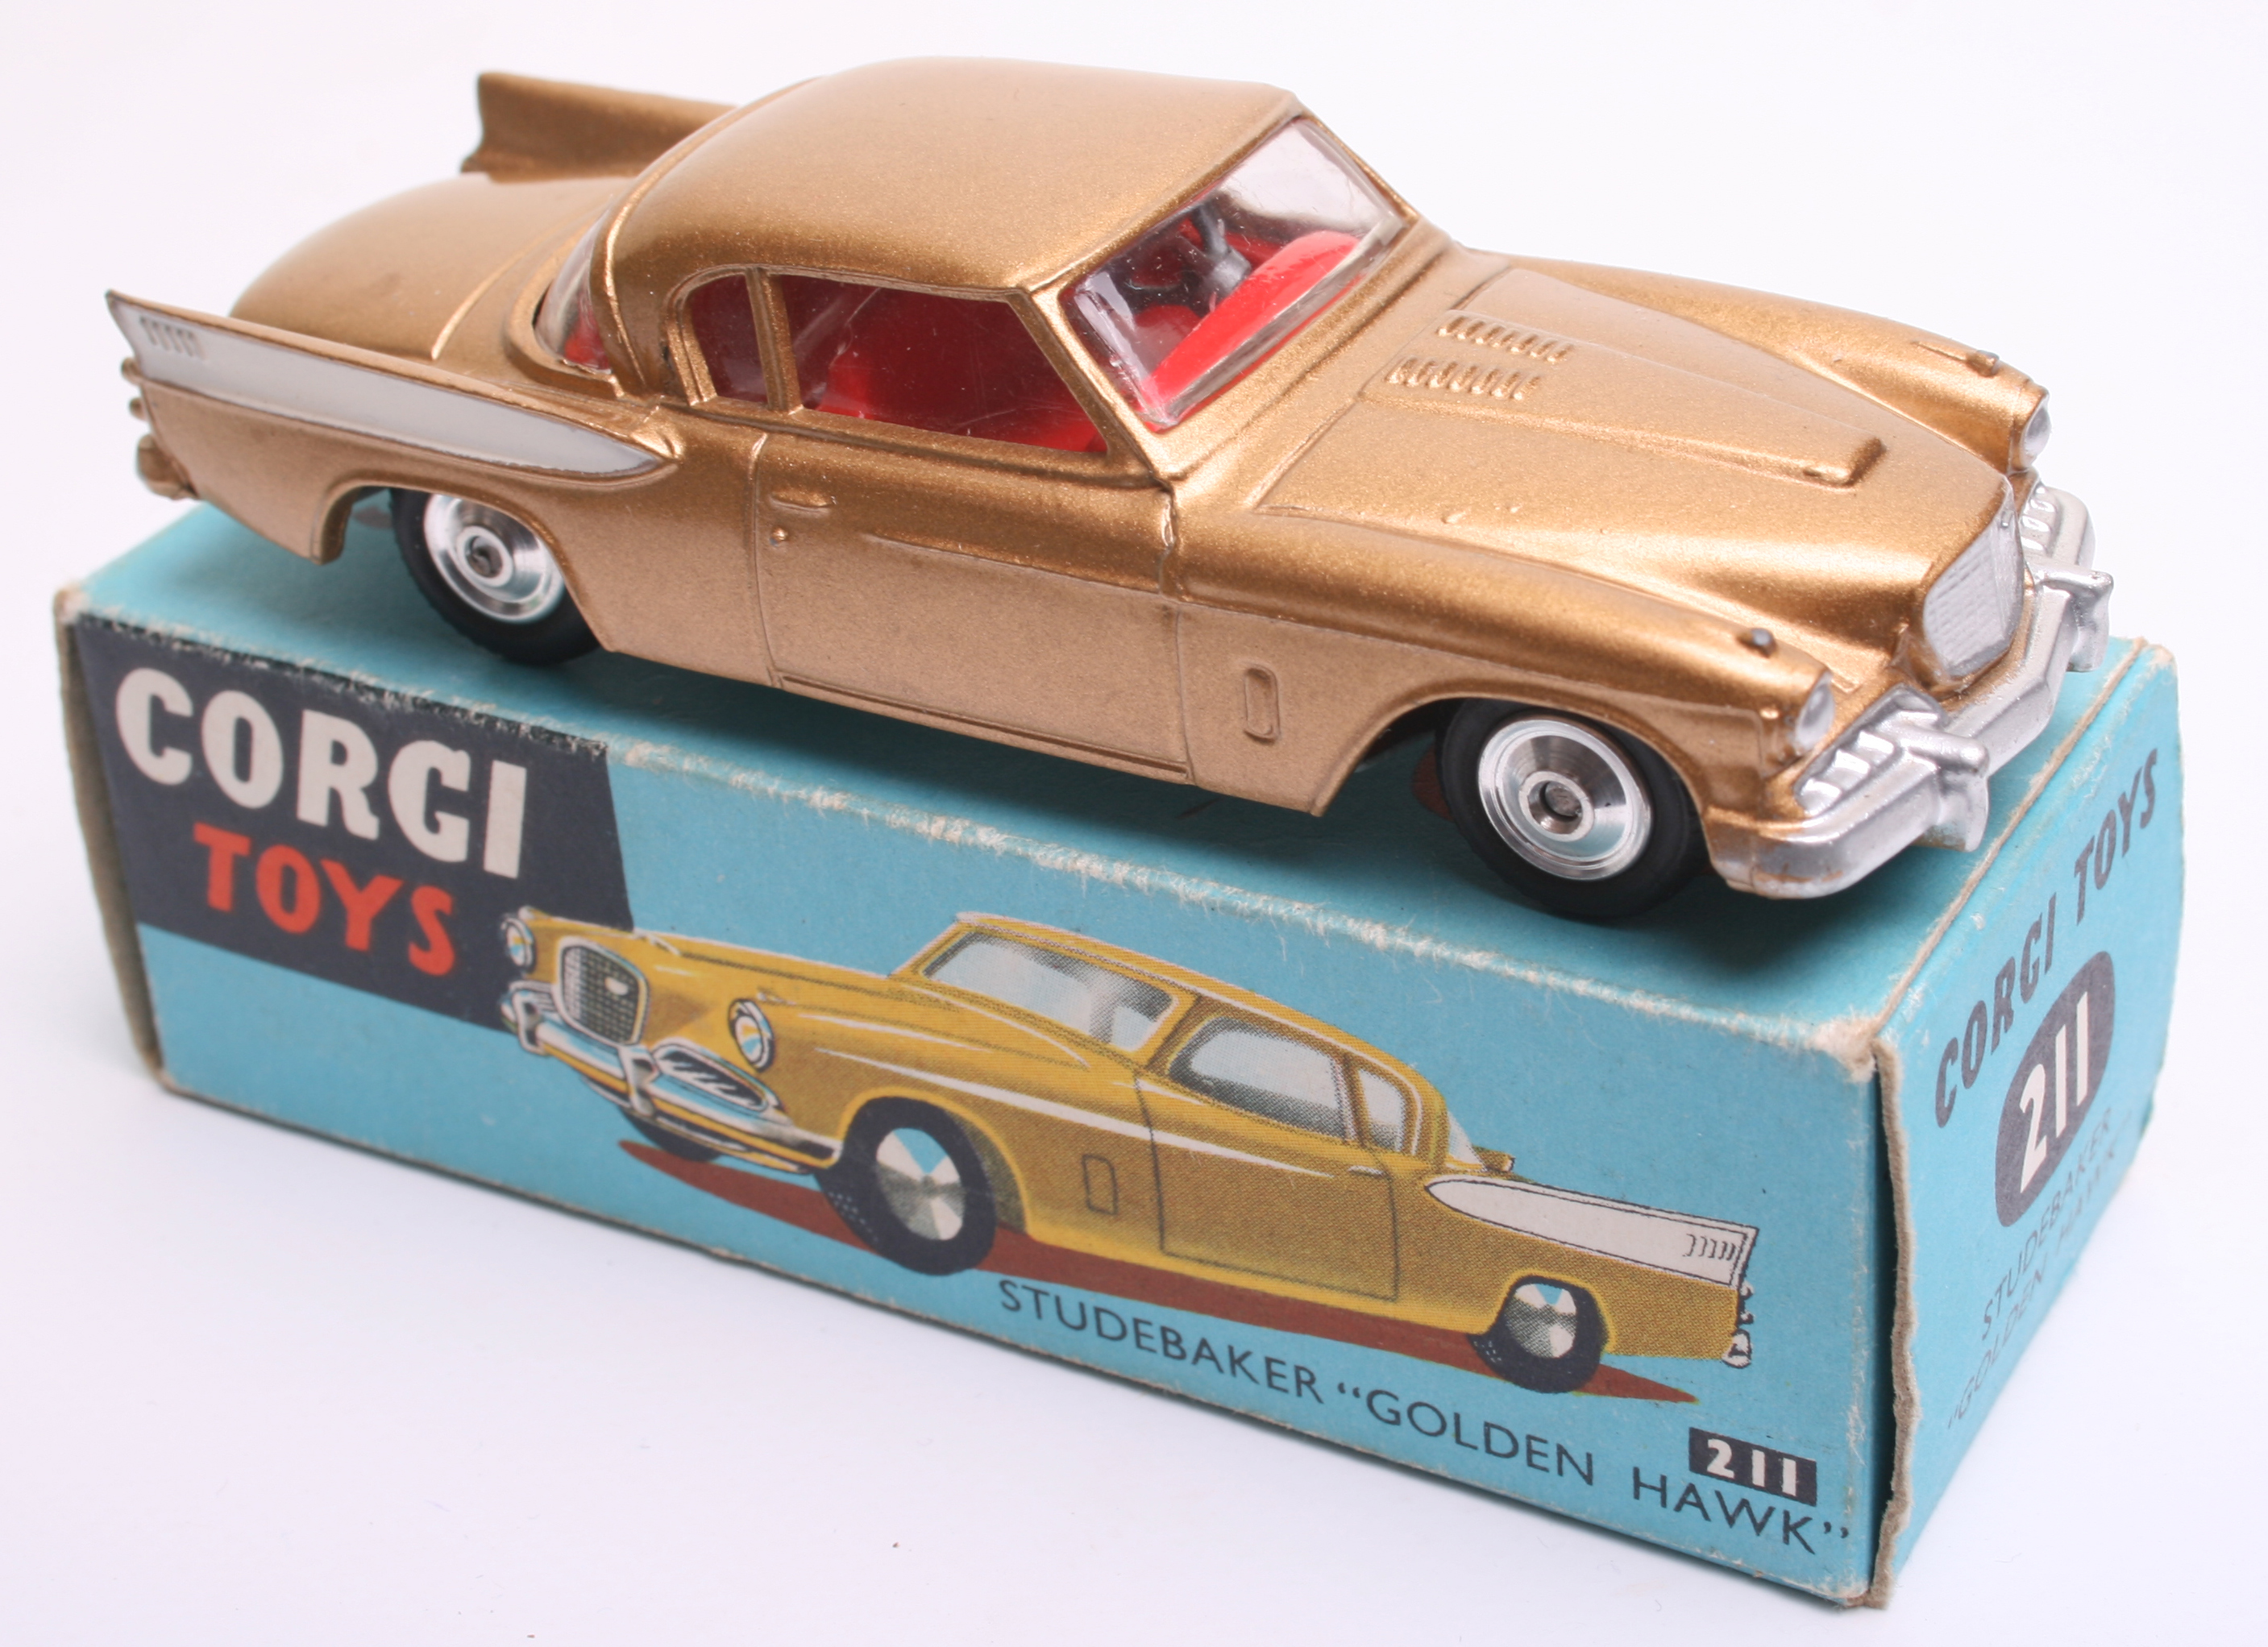 Corgi Toys 211S Studebaker “Golden Hawk” gold body/white trim, spun wheels, in near mint condition - Image 2 of 3